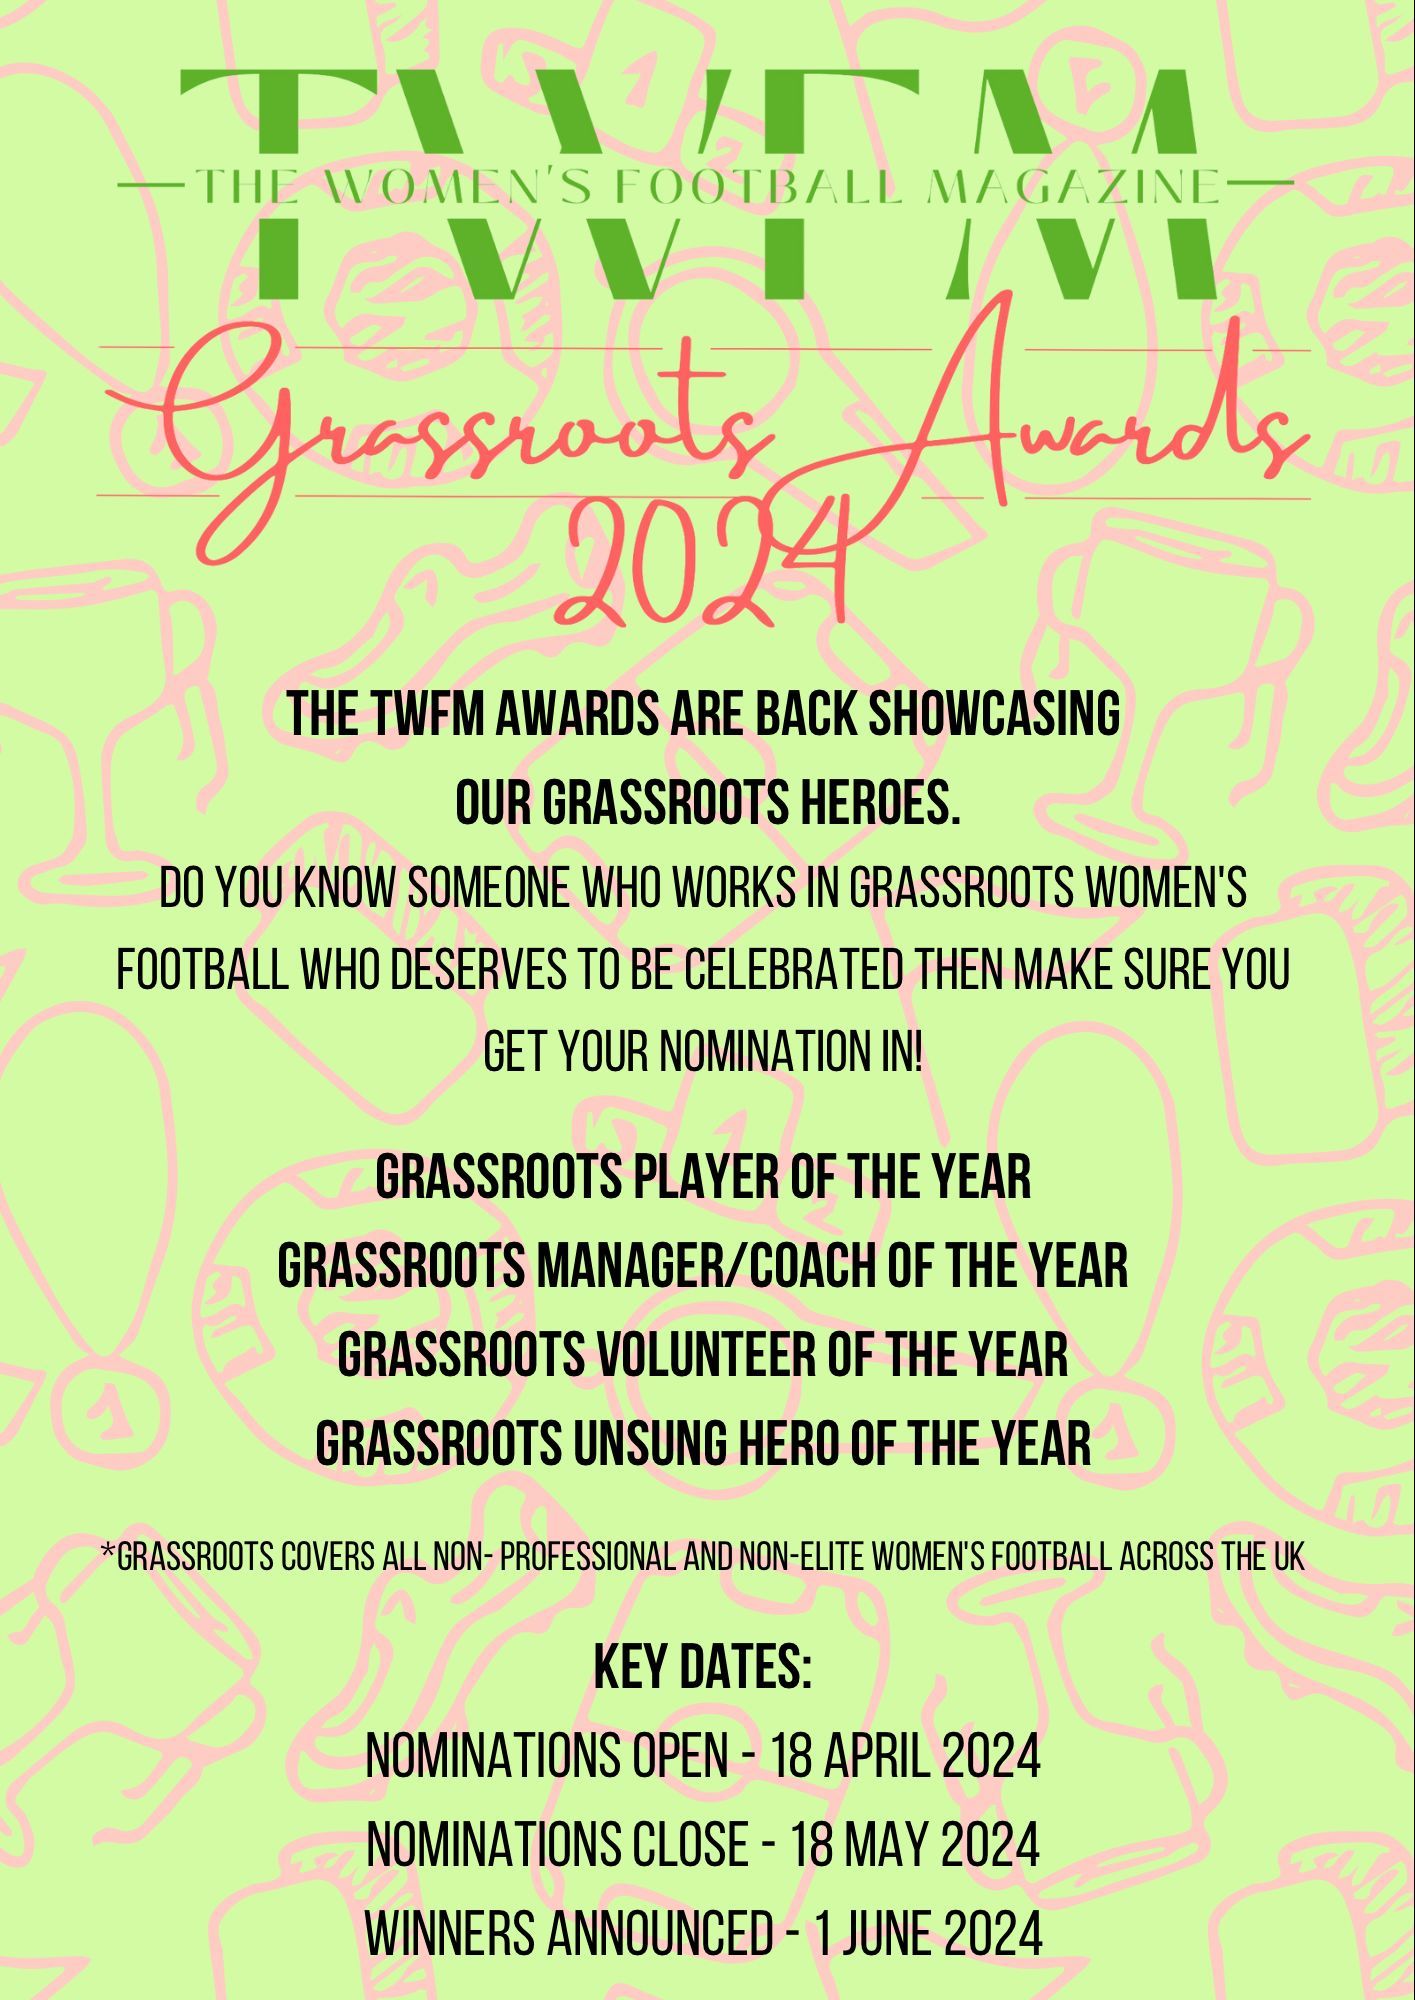 TWFM Grassroots Awards 2024 information